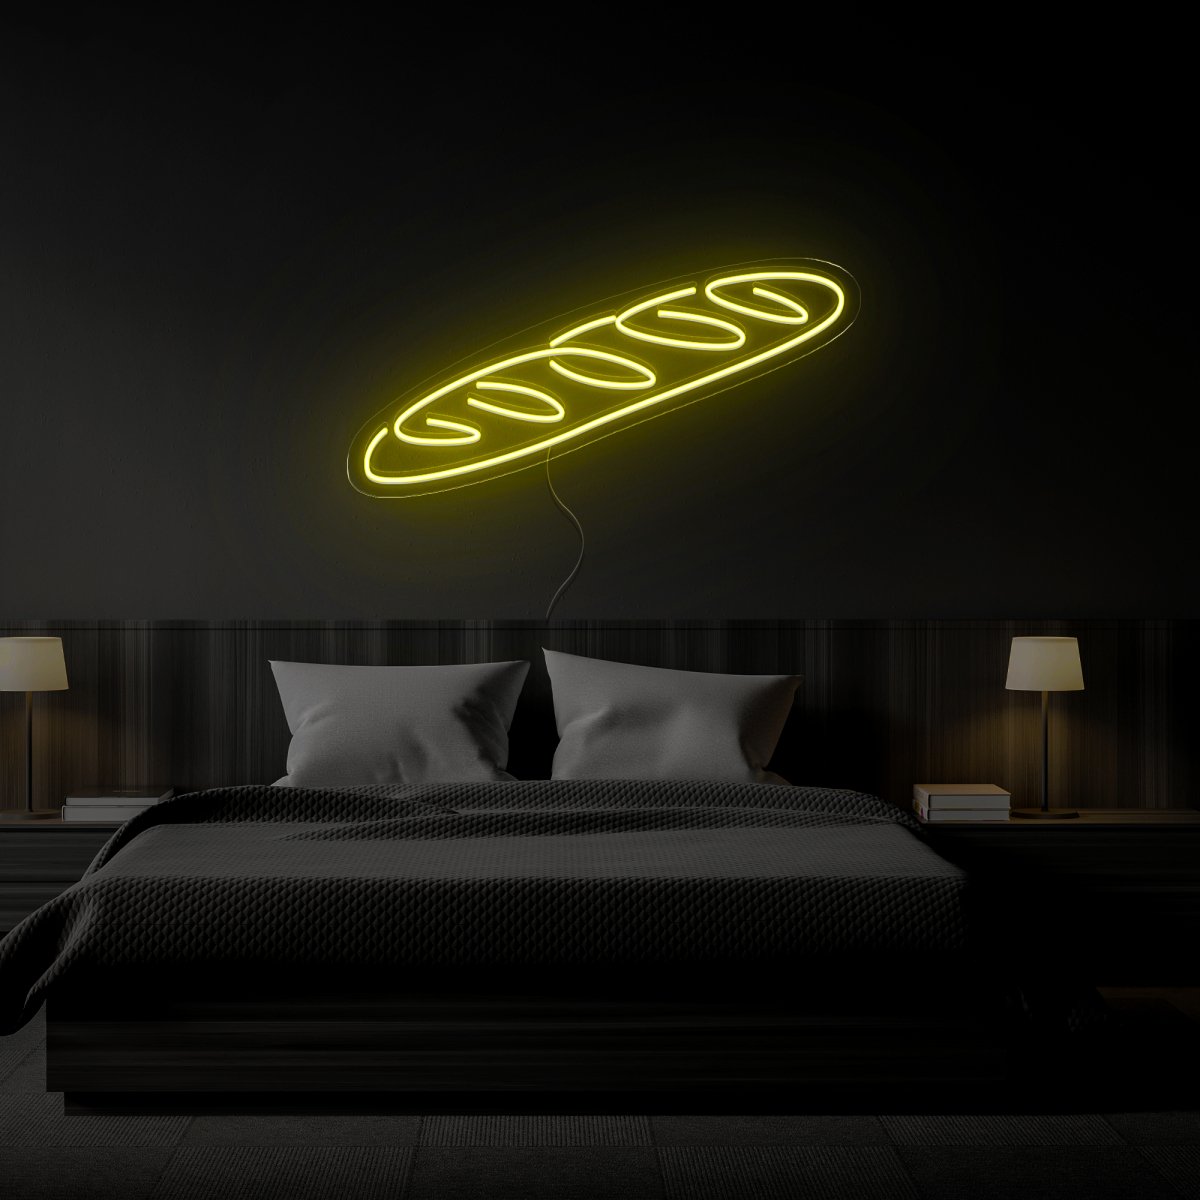 Baguette Neon Sign - Reels Custom